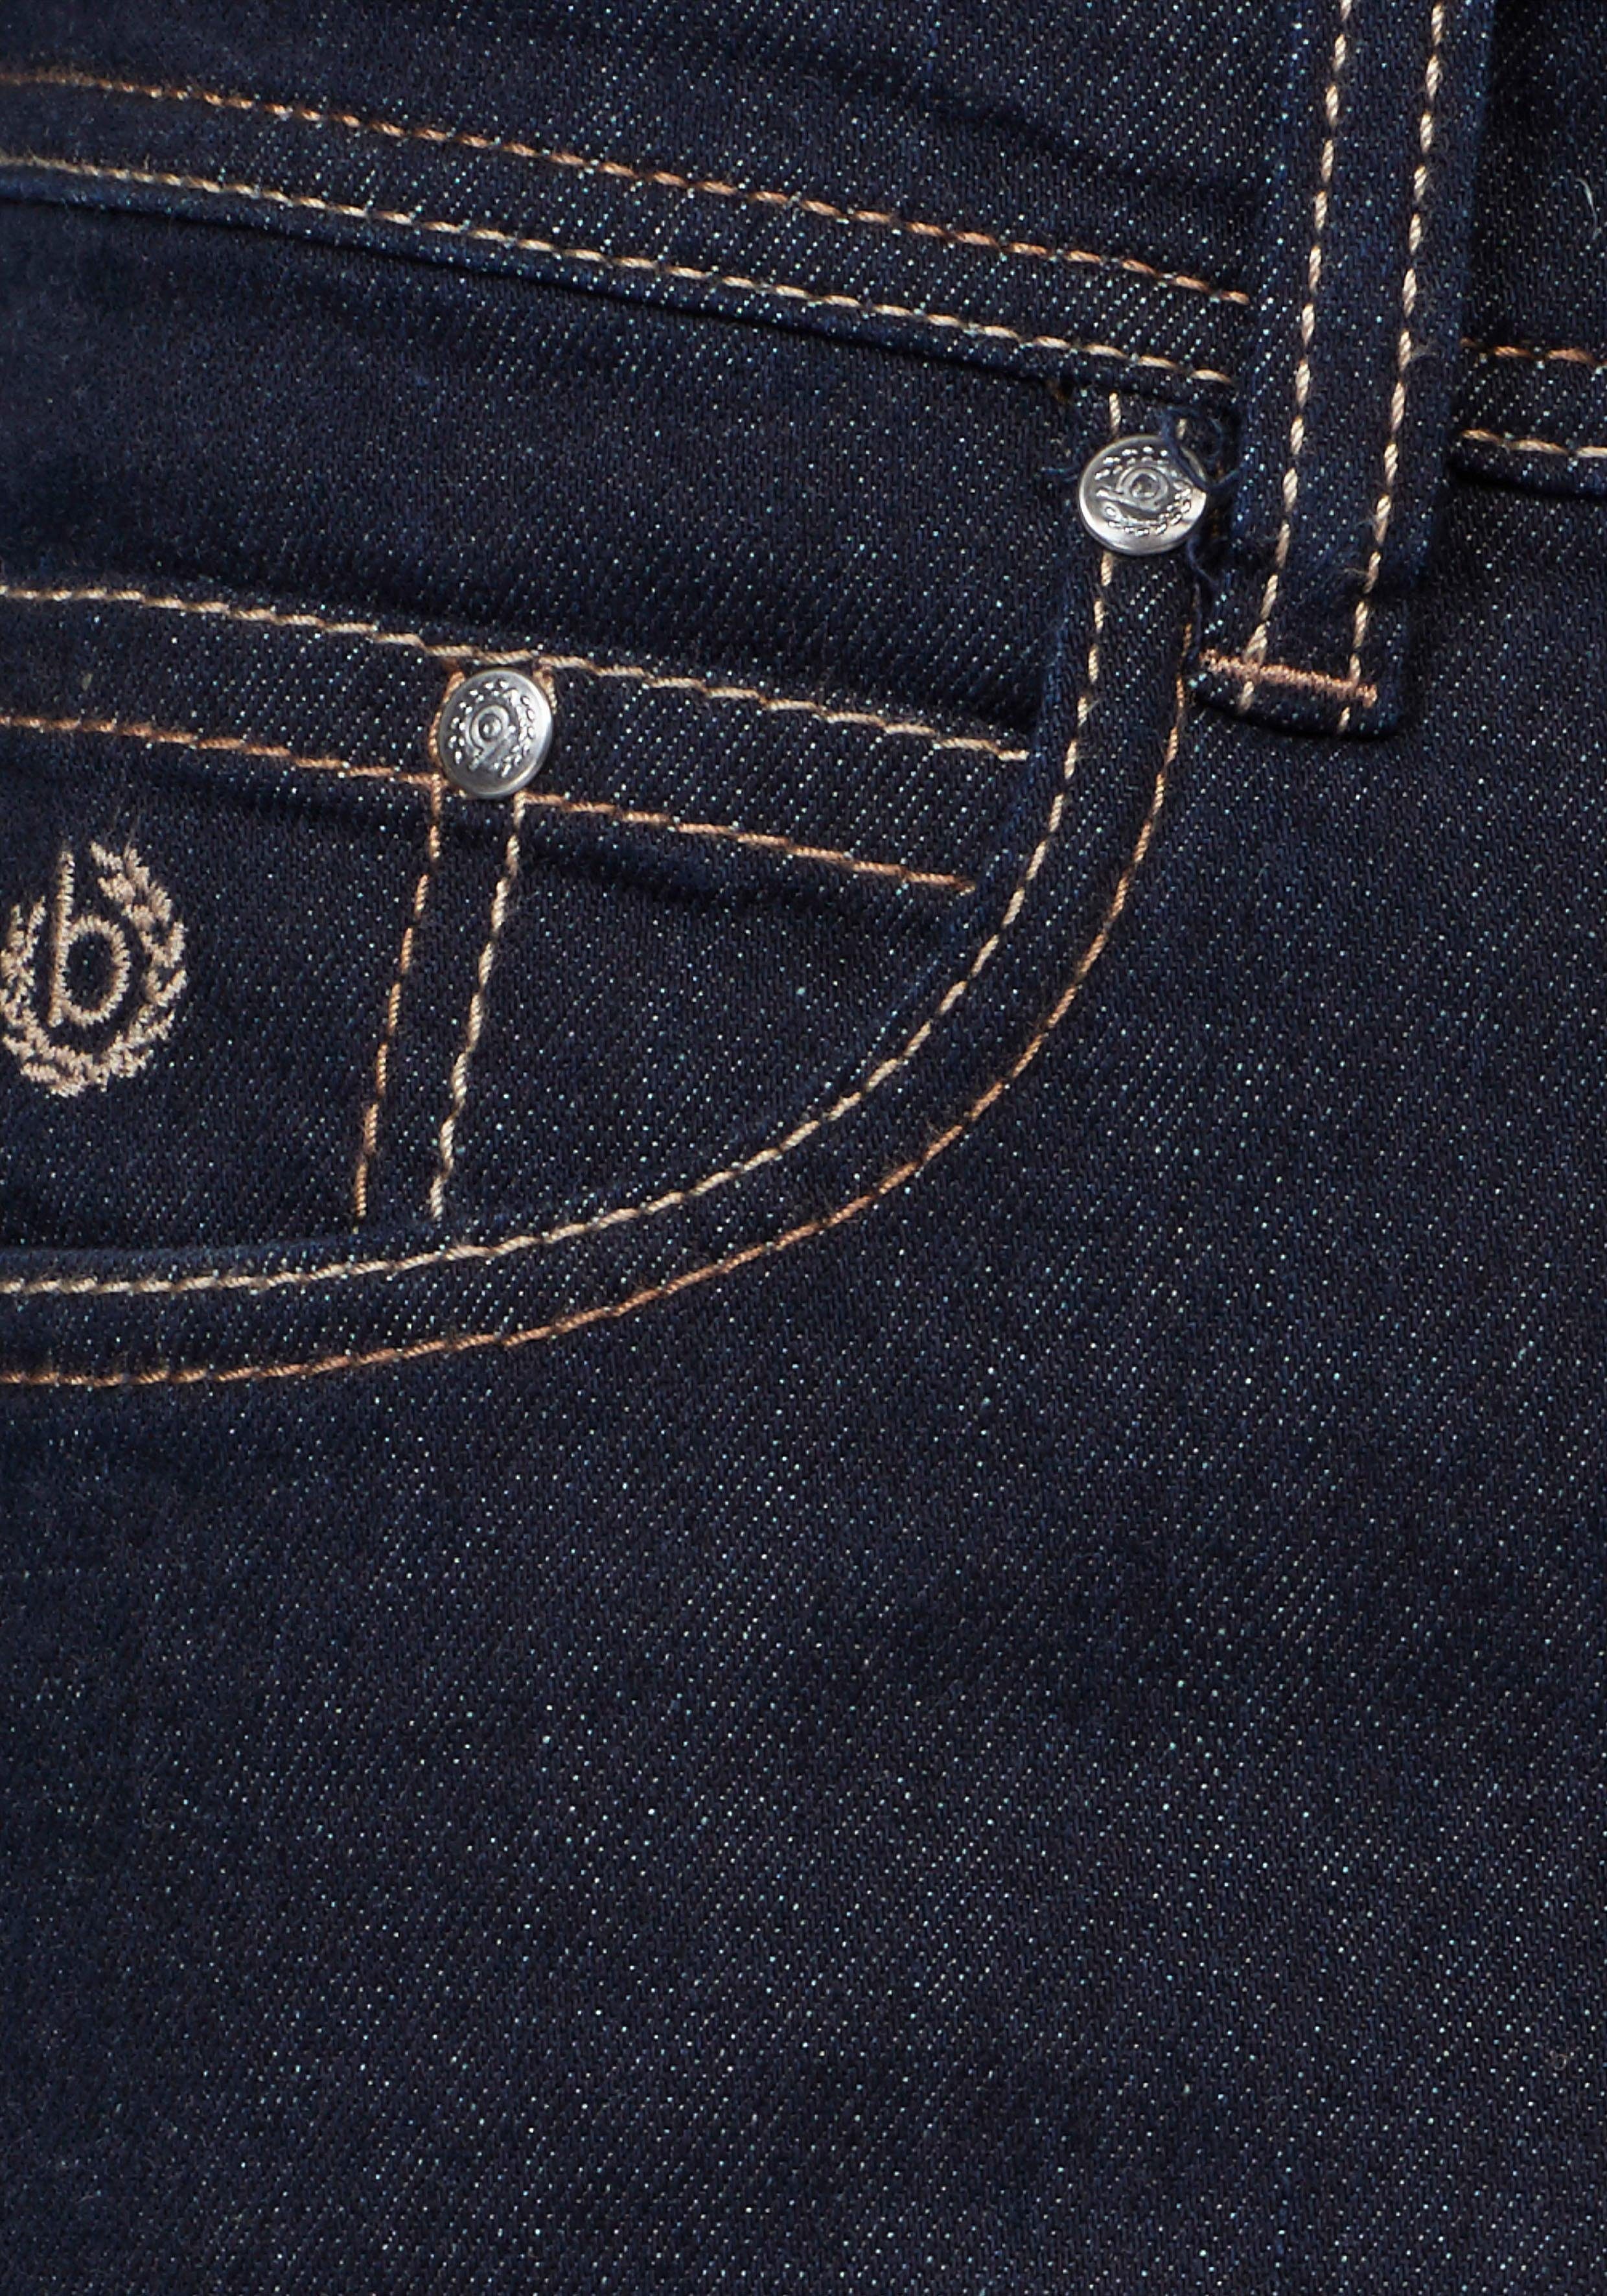 bugatti darkblue Regular-fit, Regular-fit-Jeans Kontrastnähte 2farbige